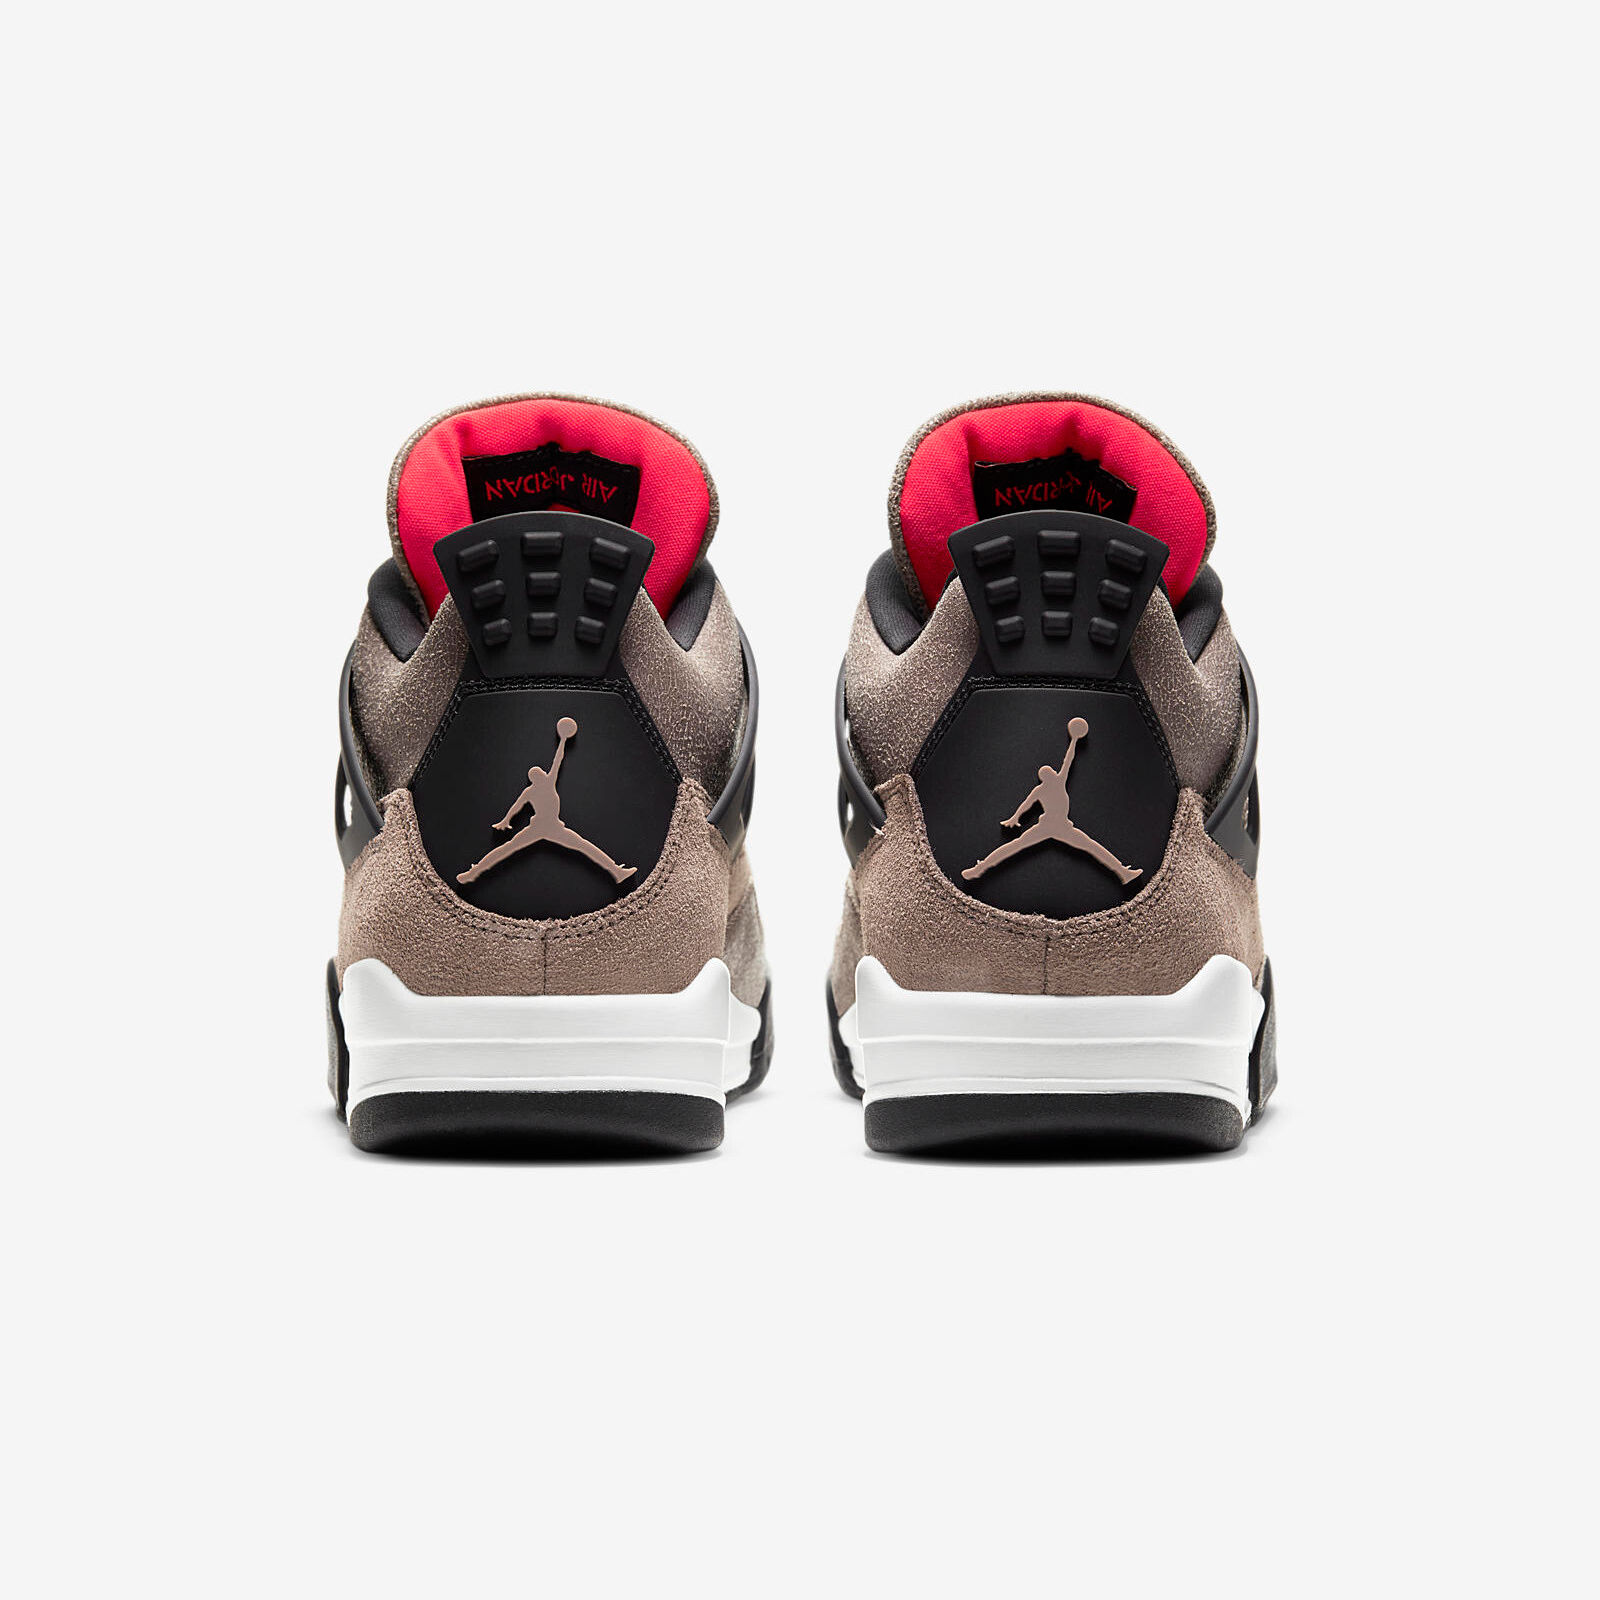 Air Jordan 4 Retro
« Taupe Haze »